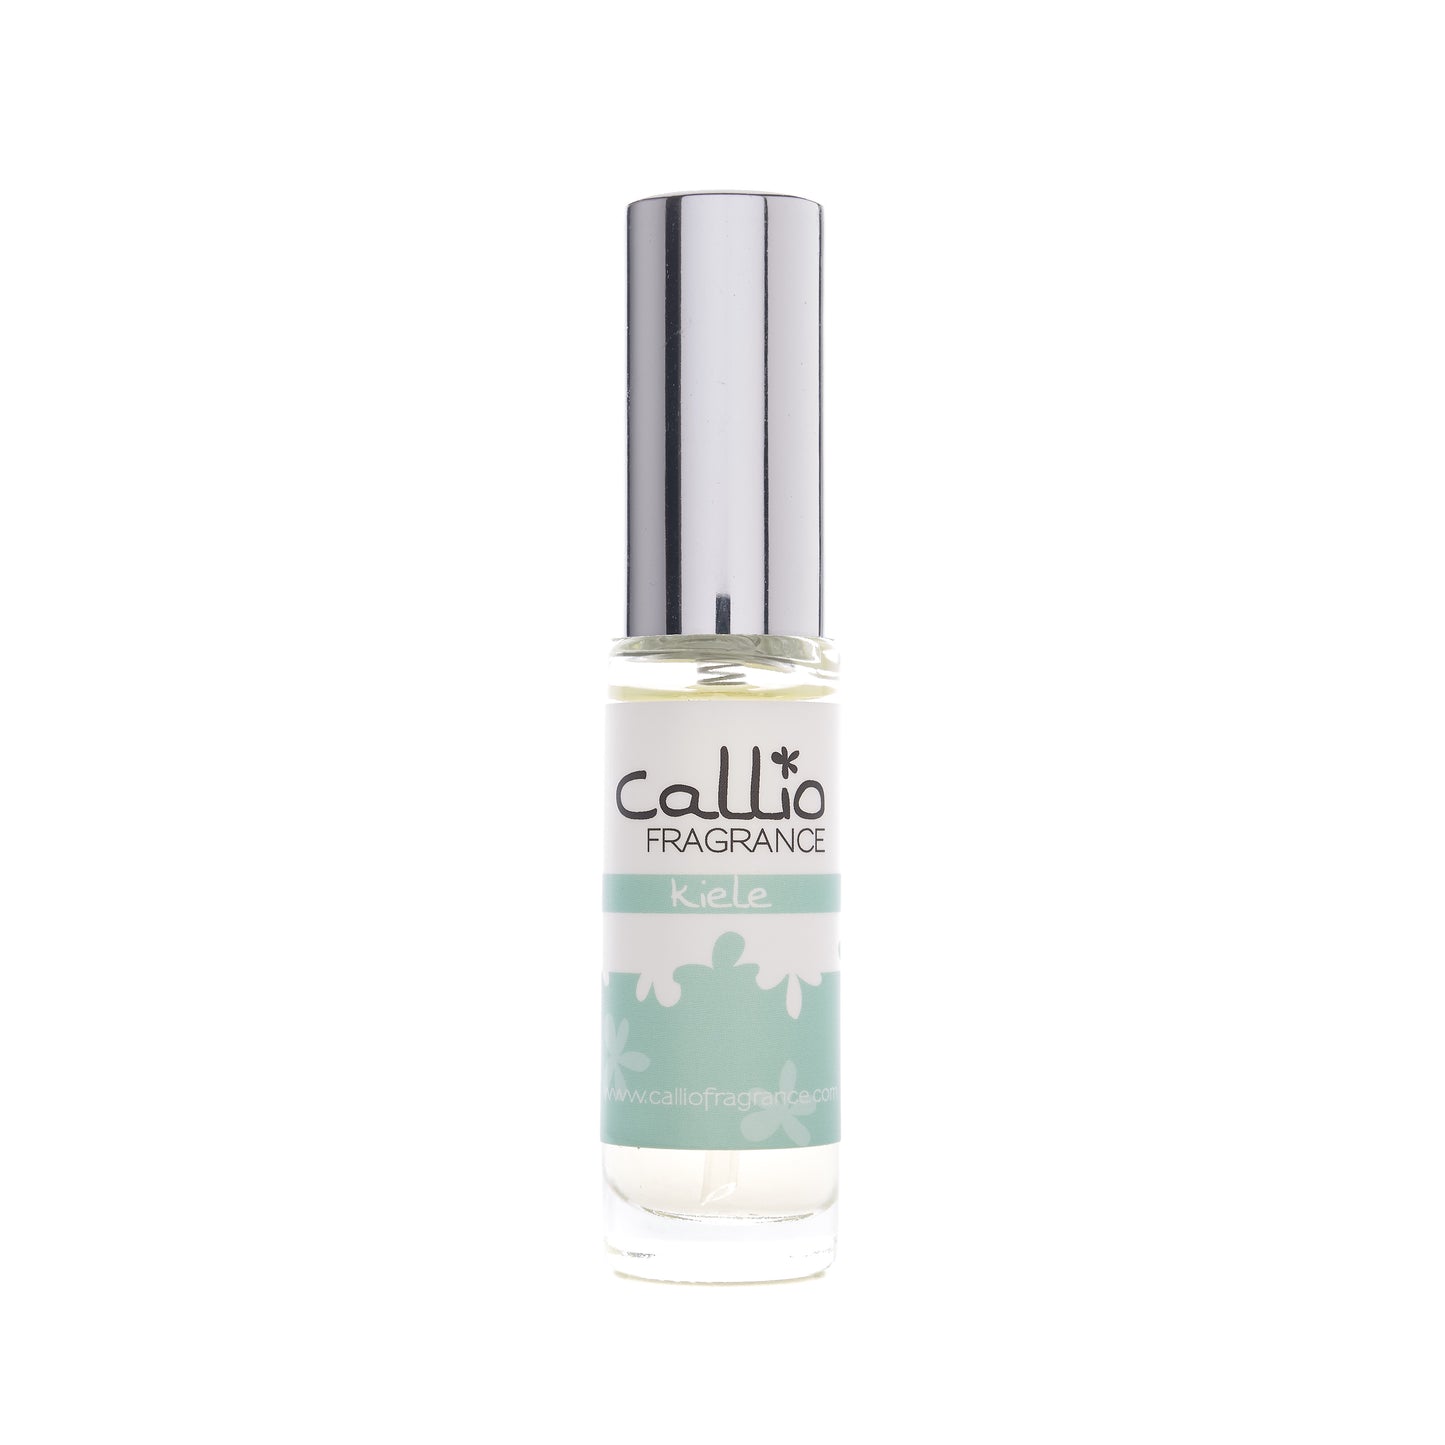 Kiele Travel Perfume Spray - Callio Fragrance